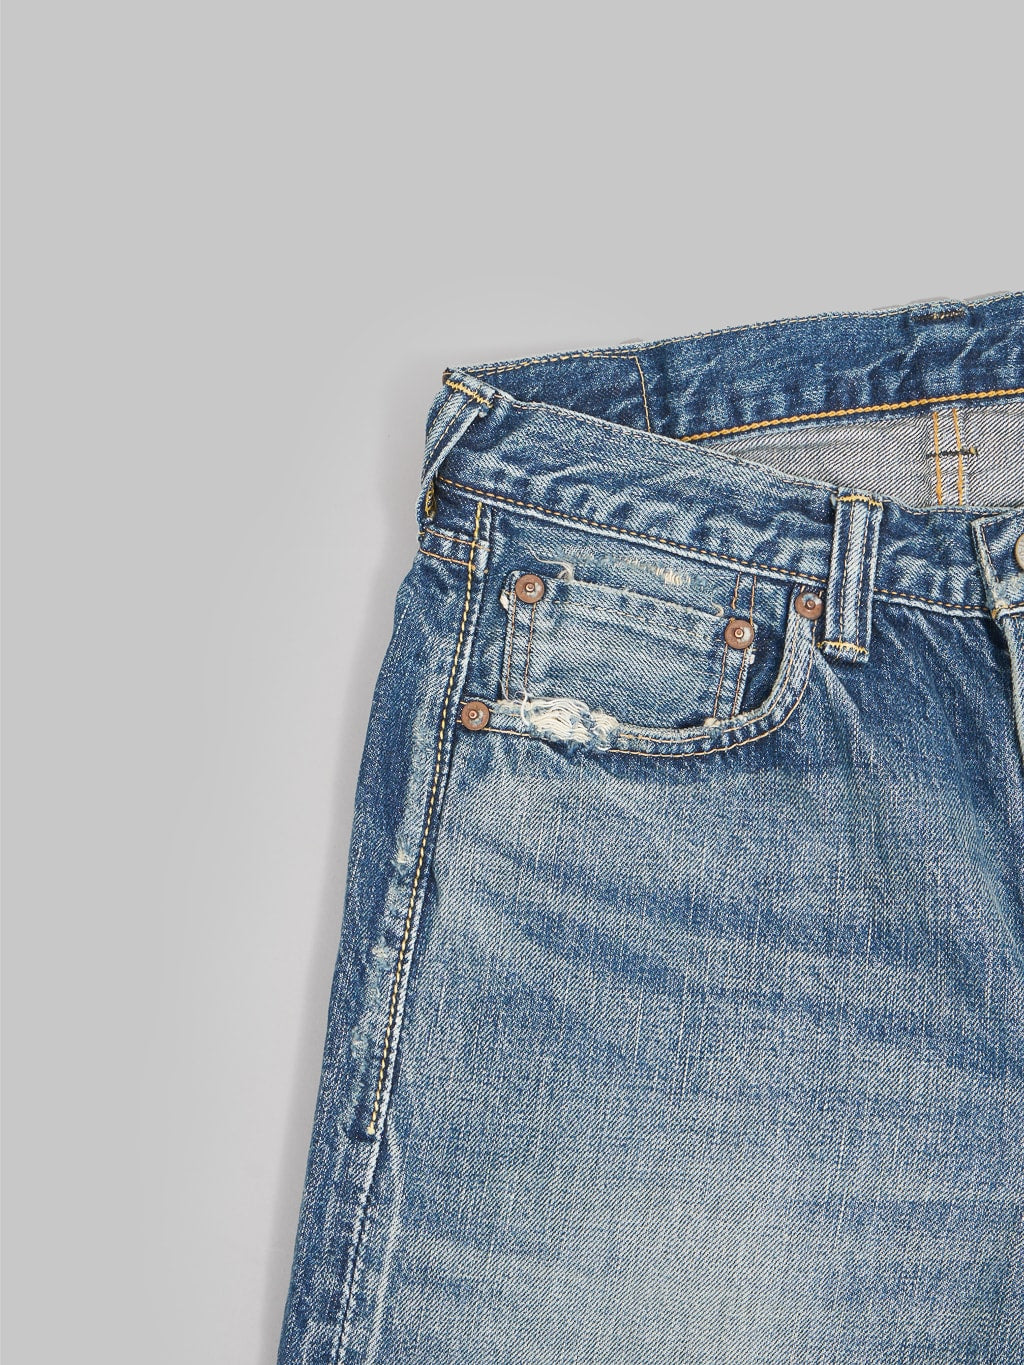 Fullcount 1108 Dartford Slim Straight Jeans pocket details